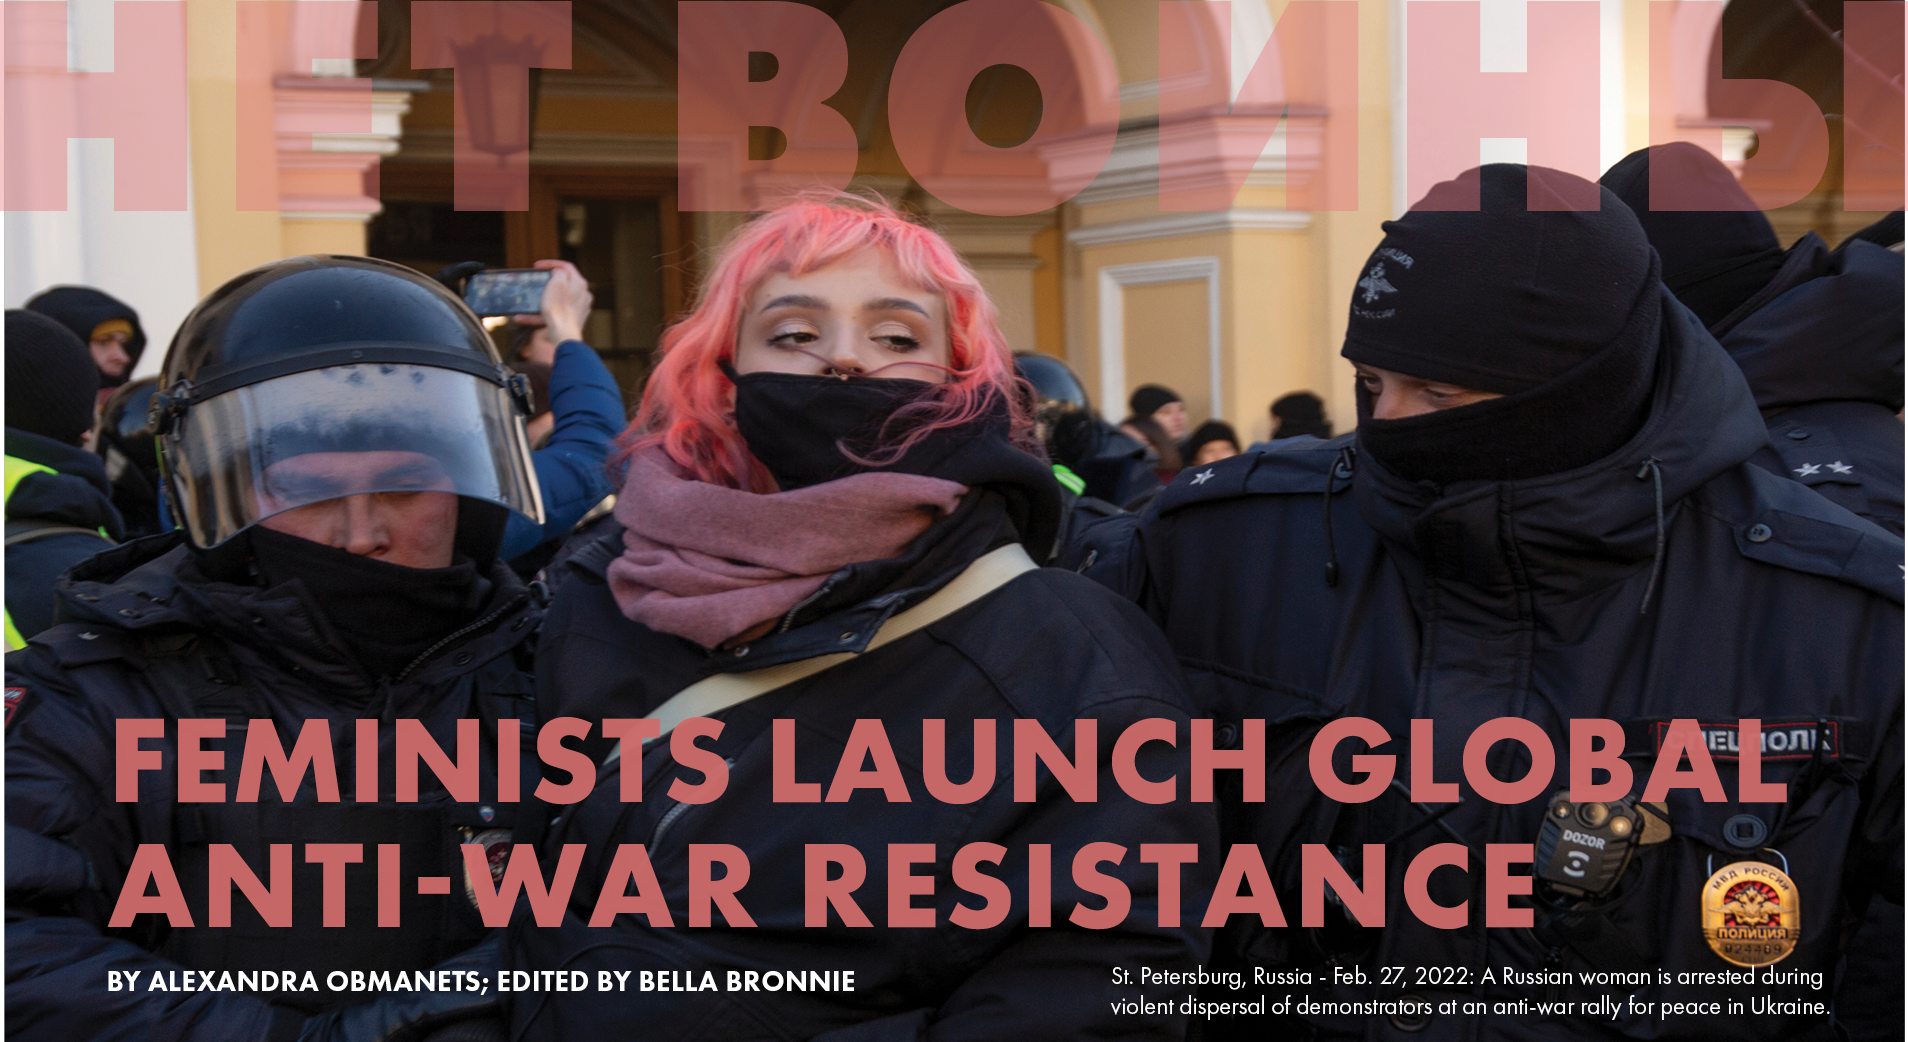 Feminist Anti-war Resistance